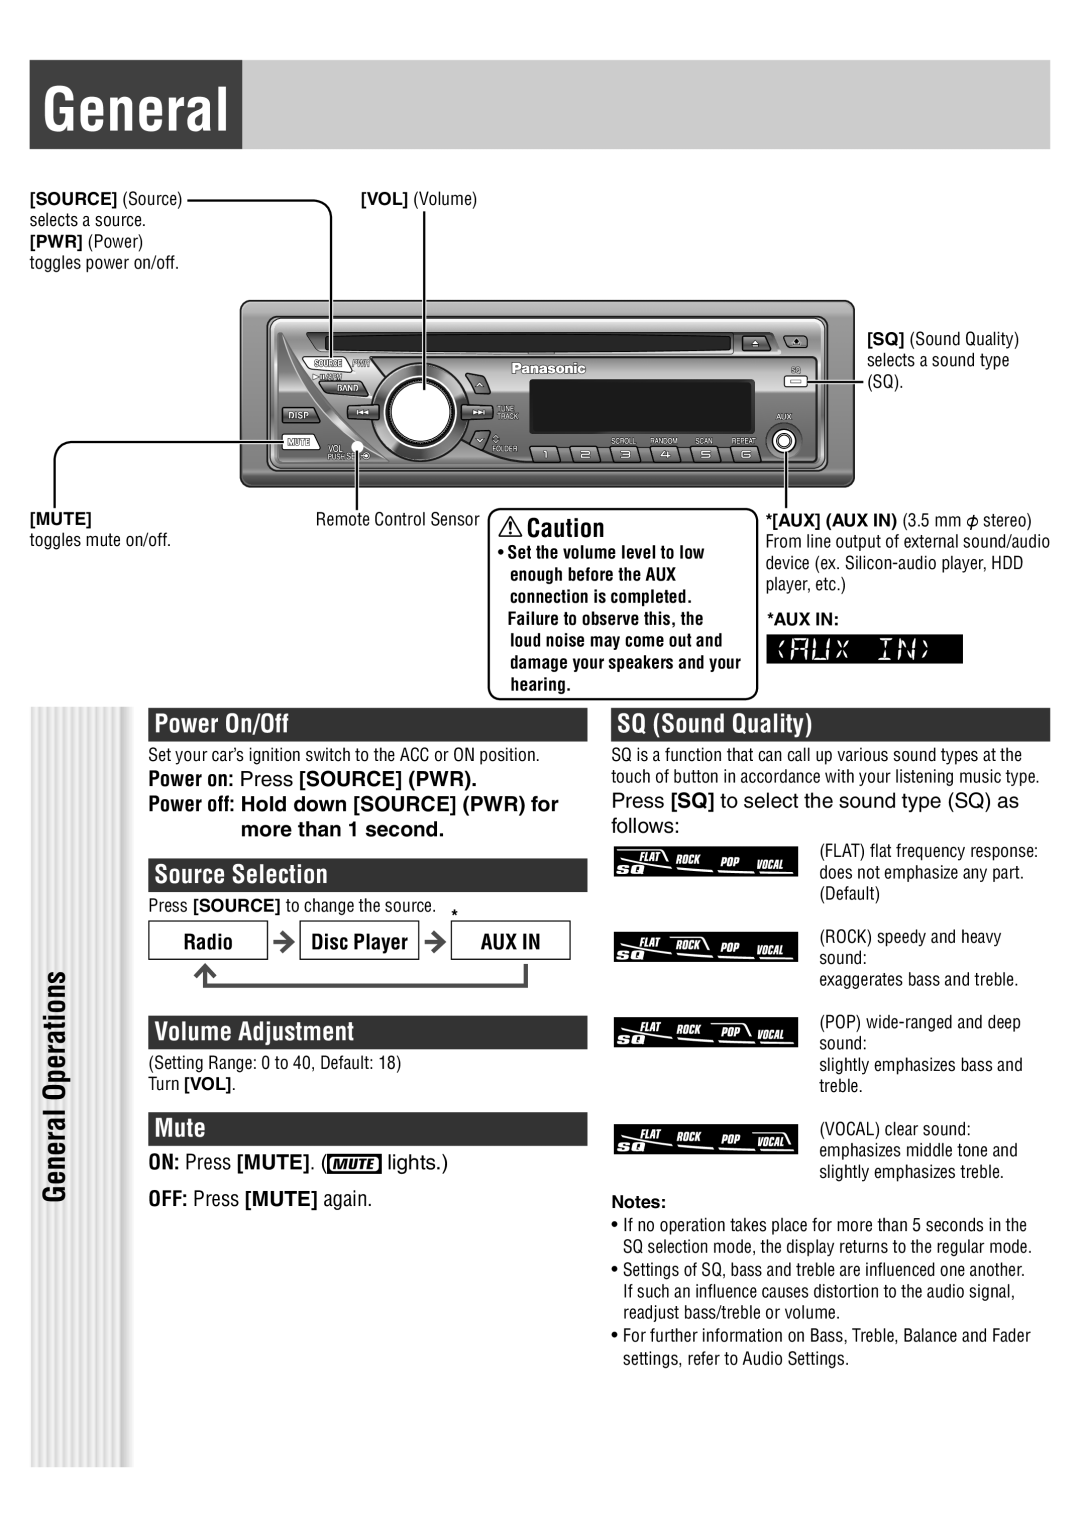 Panasonic CQ-C1335U General, Power On/Off, SQ Sound Quality, Source Selection, Volume Adjustment, Mute, follows, lights 